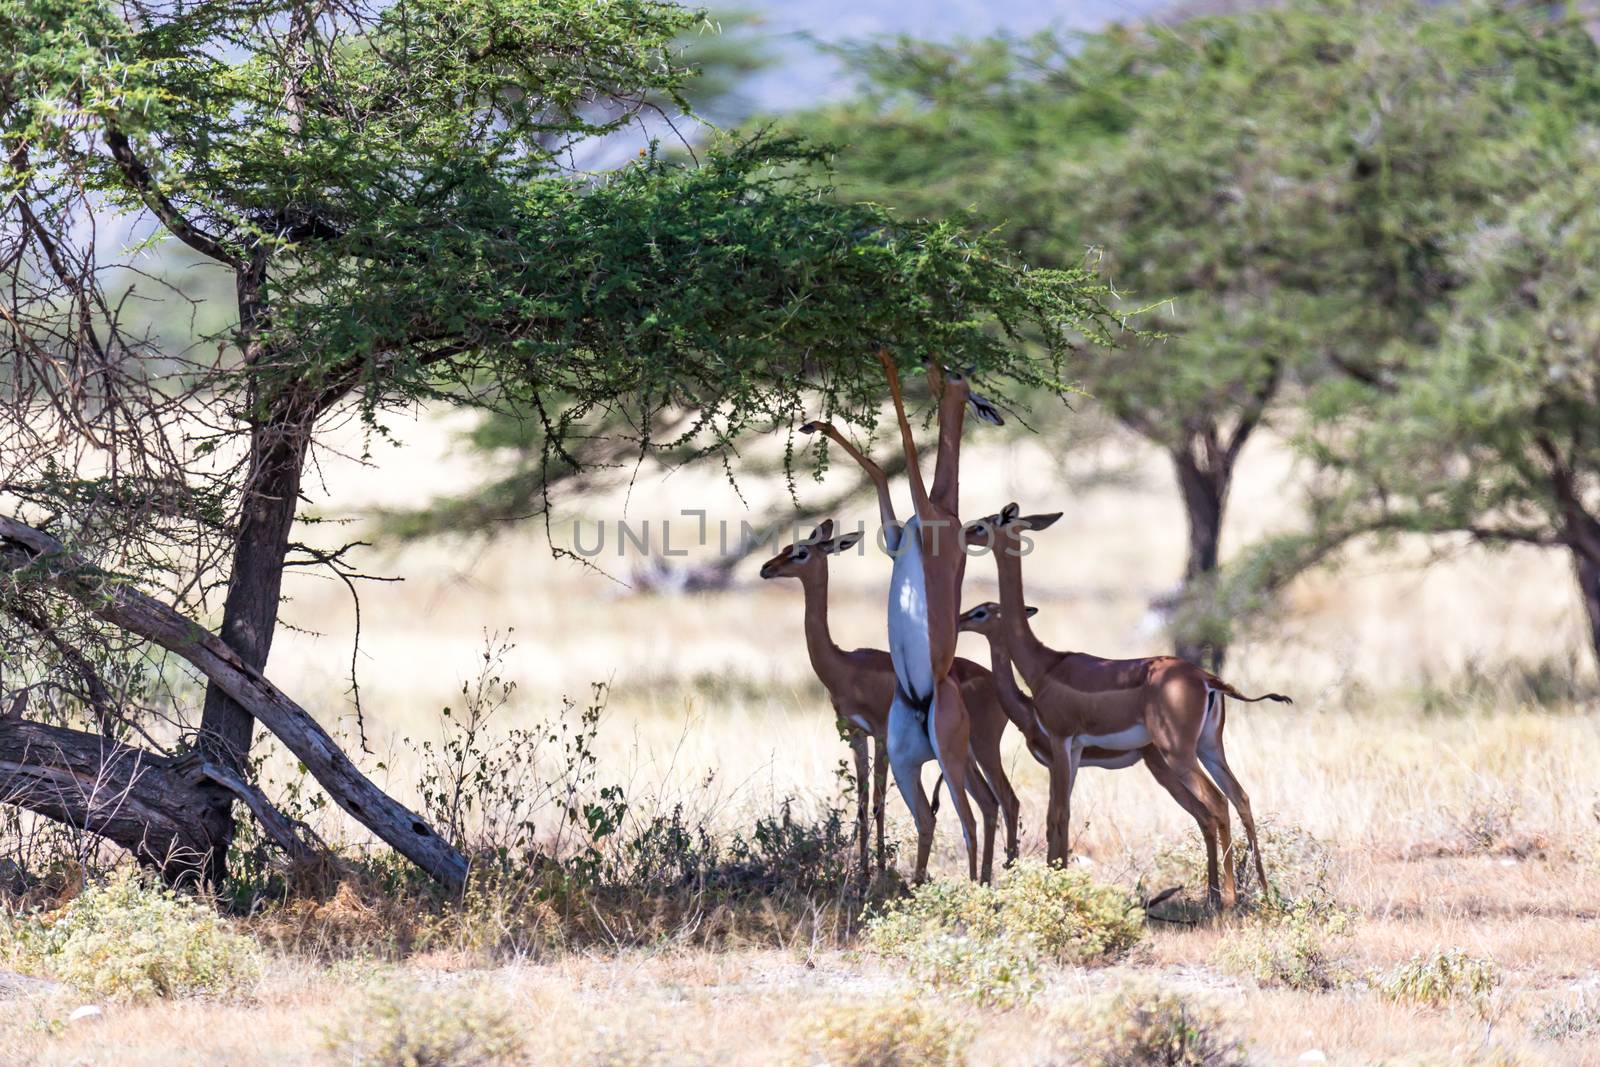 Some gerenuk in the kenyan savanna looking for food by 25ehaag6